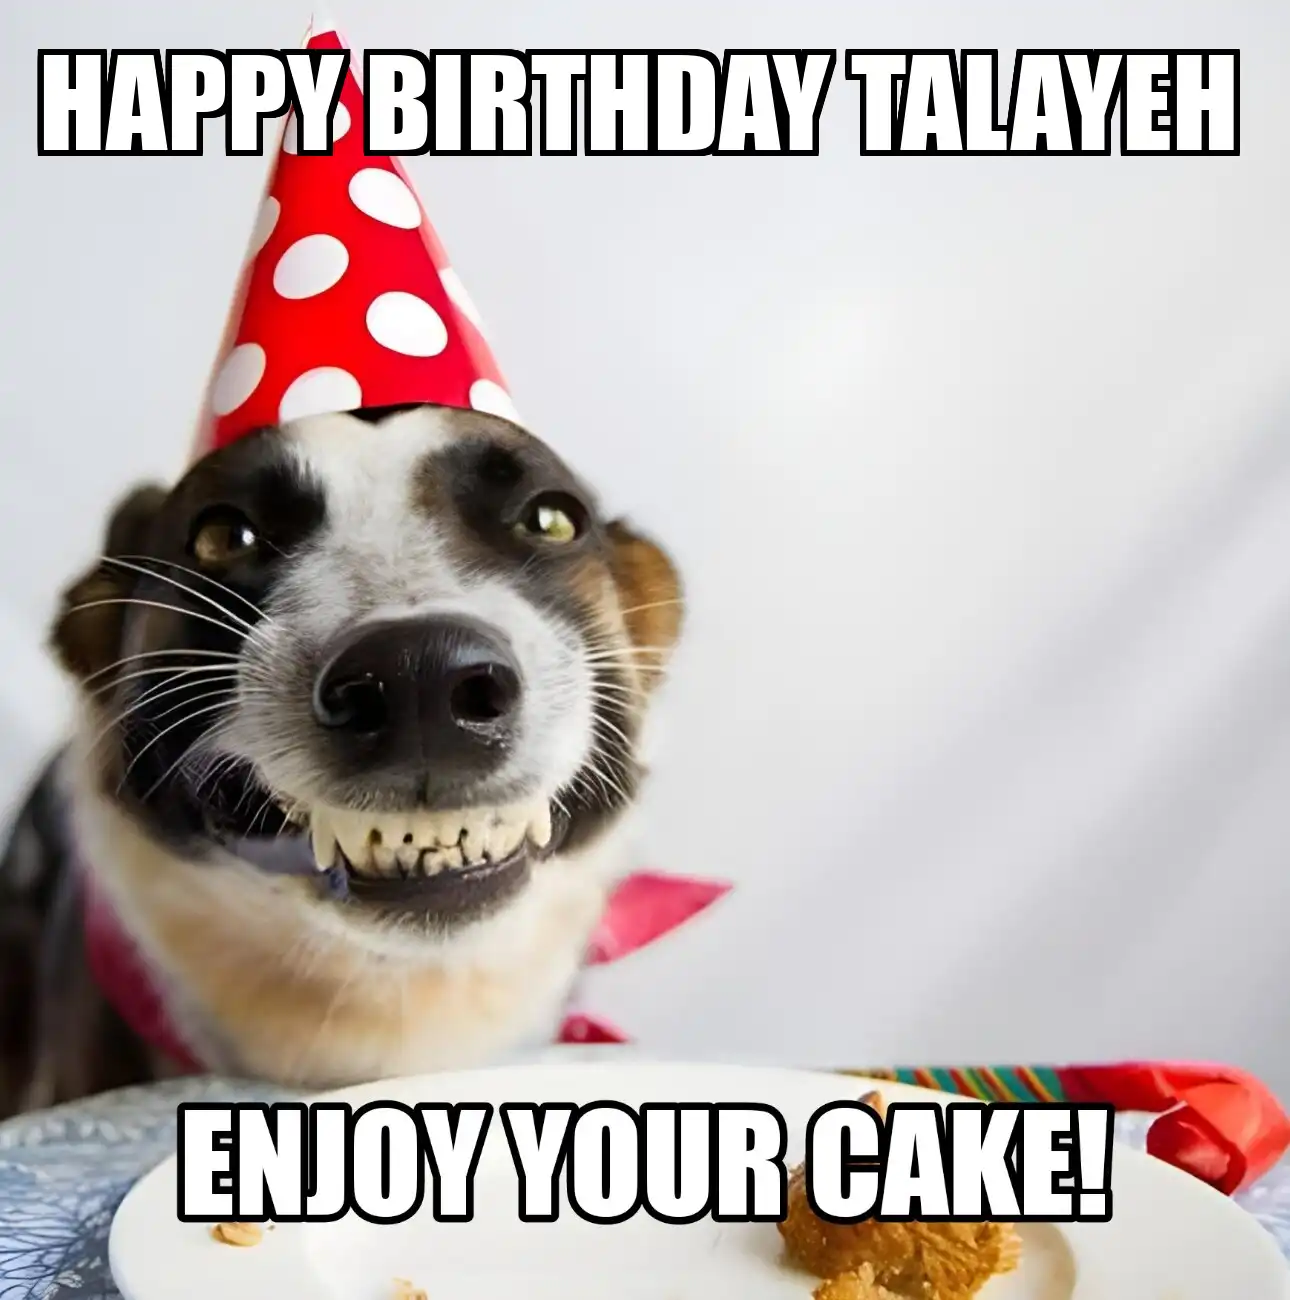 Happy Birthday Talayeh Enjoy Your Cake Dog Meme